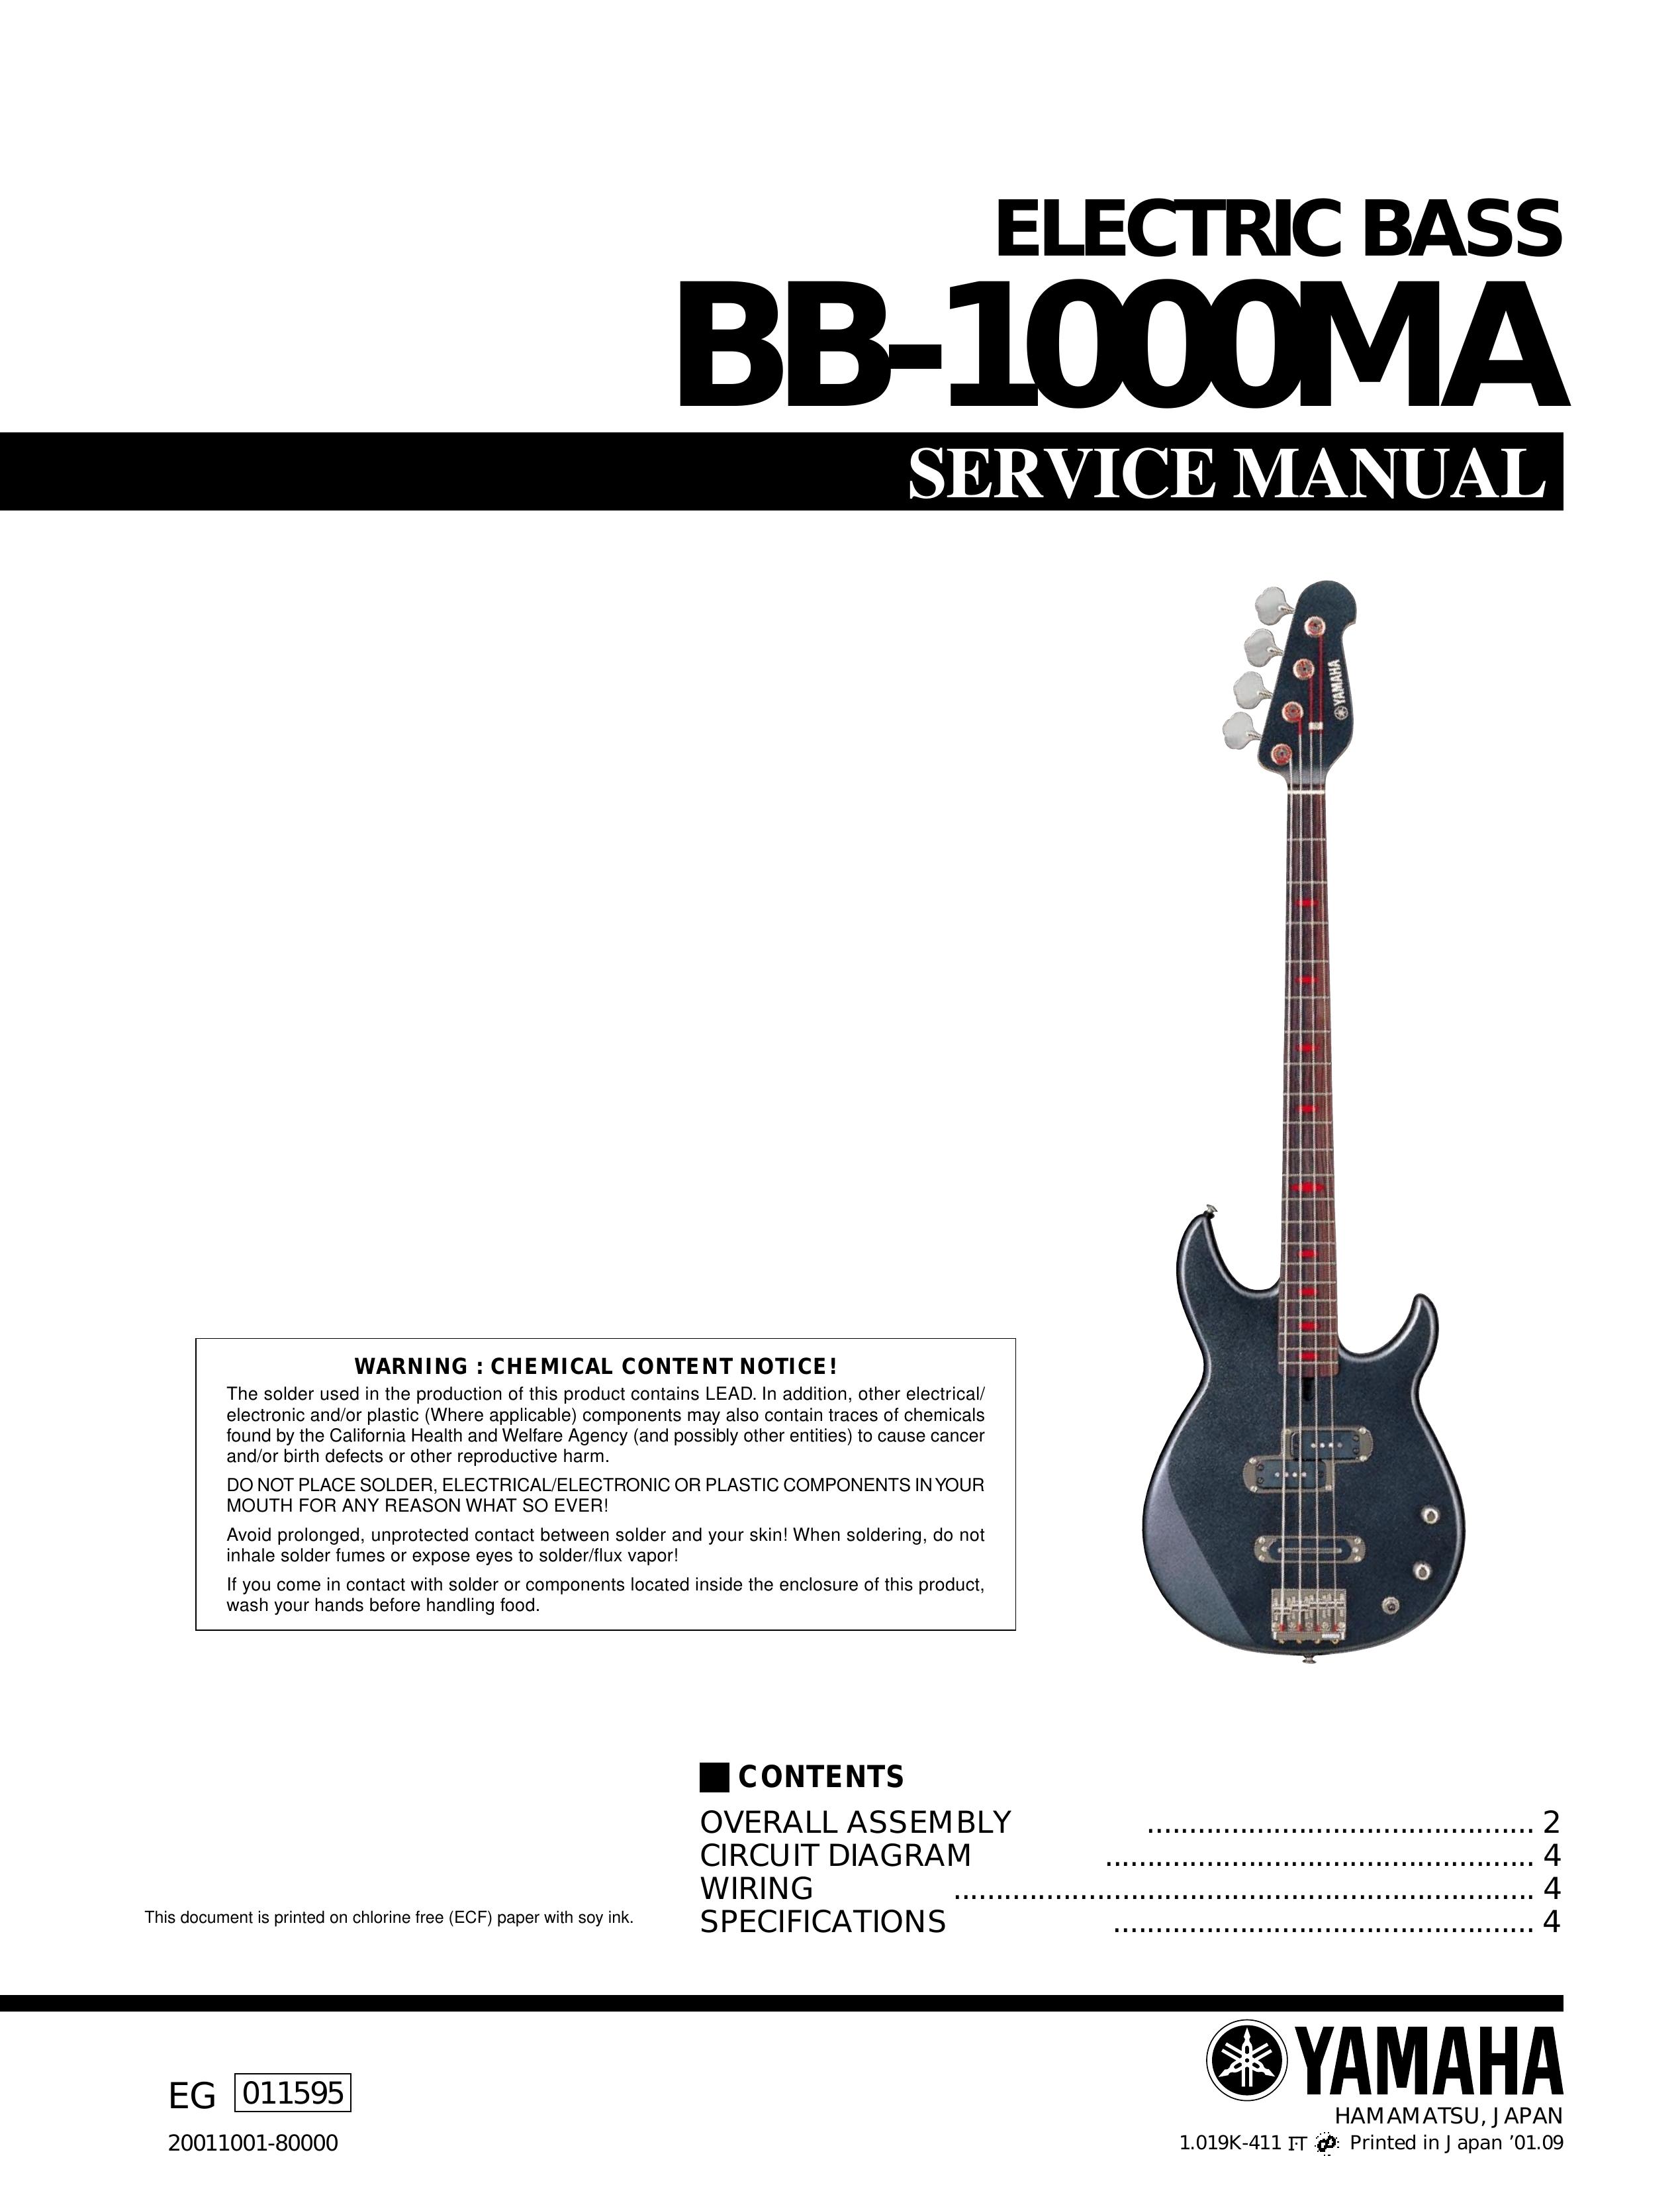 Yamaha BB-1000MA Scuba Diving Equipment User Manual